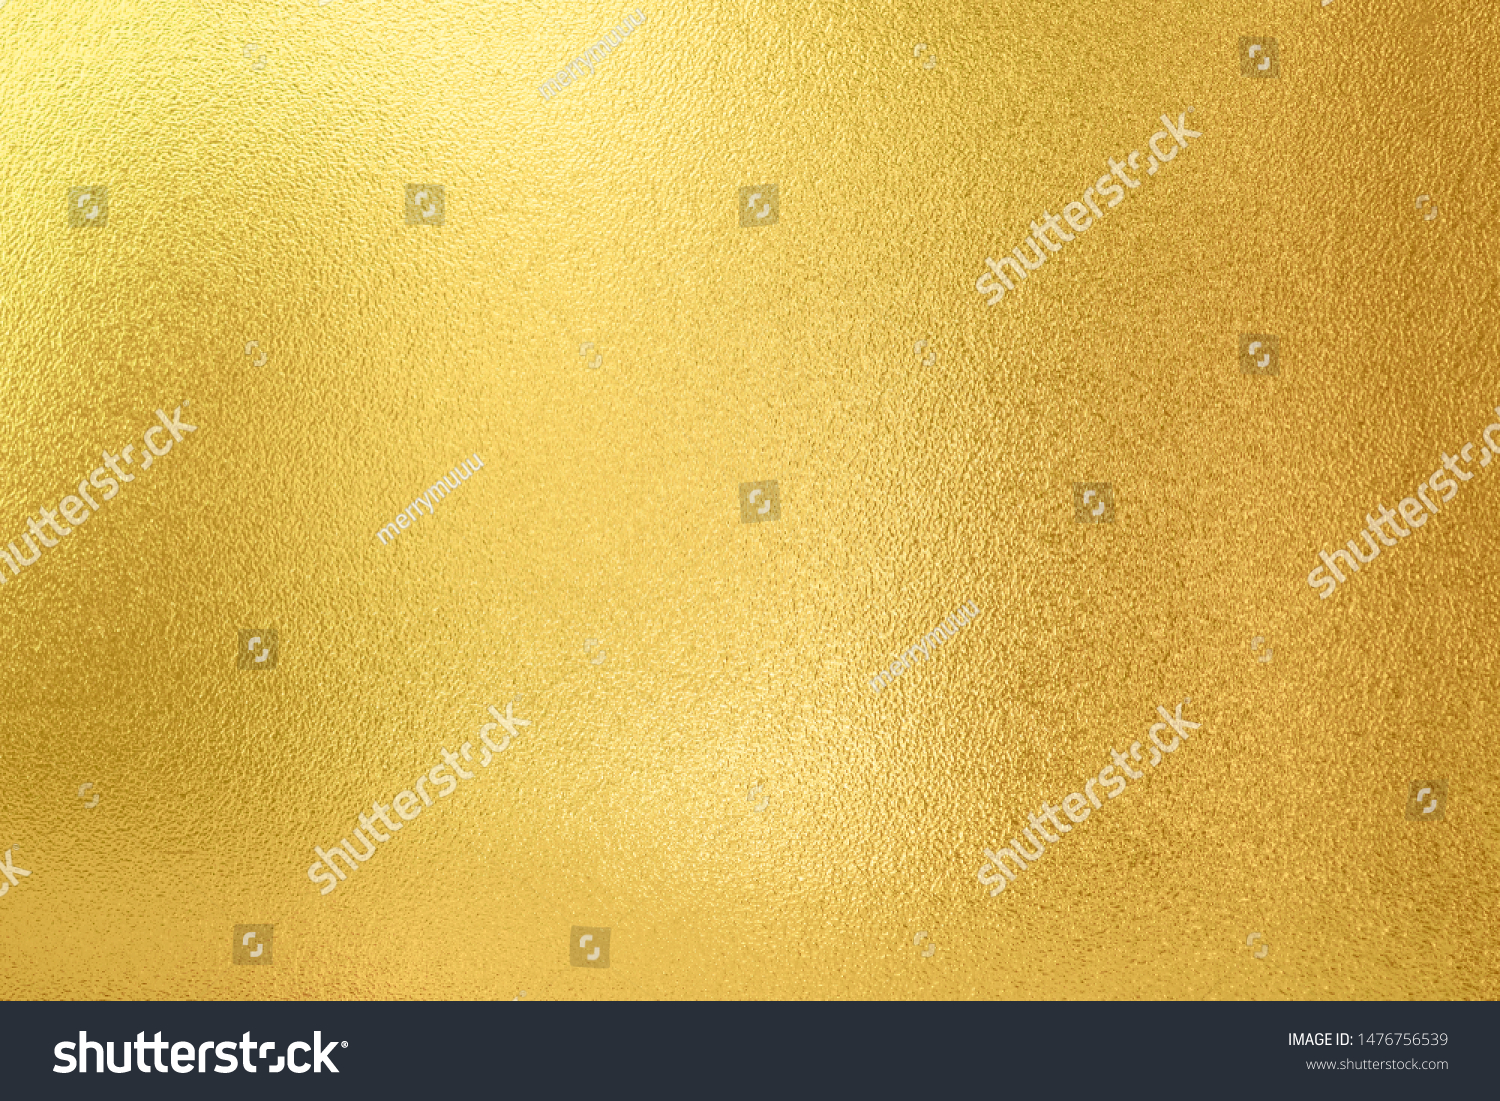 Gold background. Luxury shiny gold texture
 #1476756539